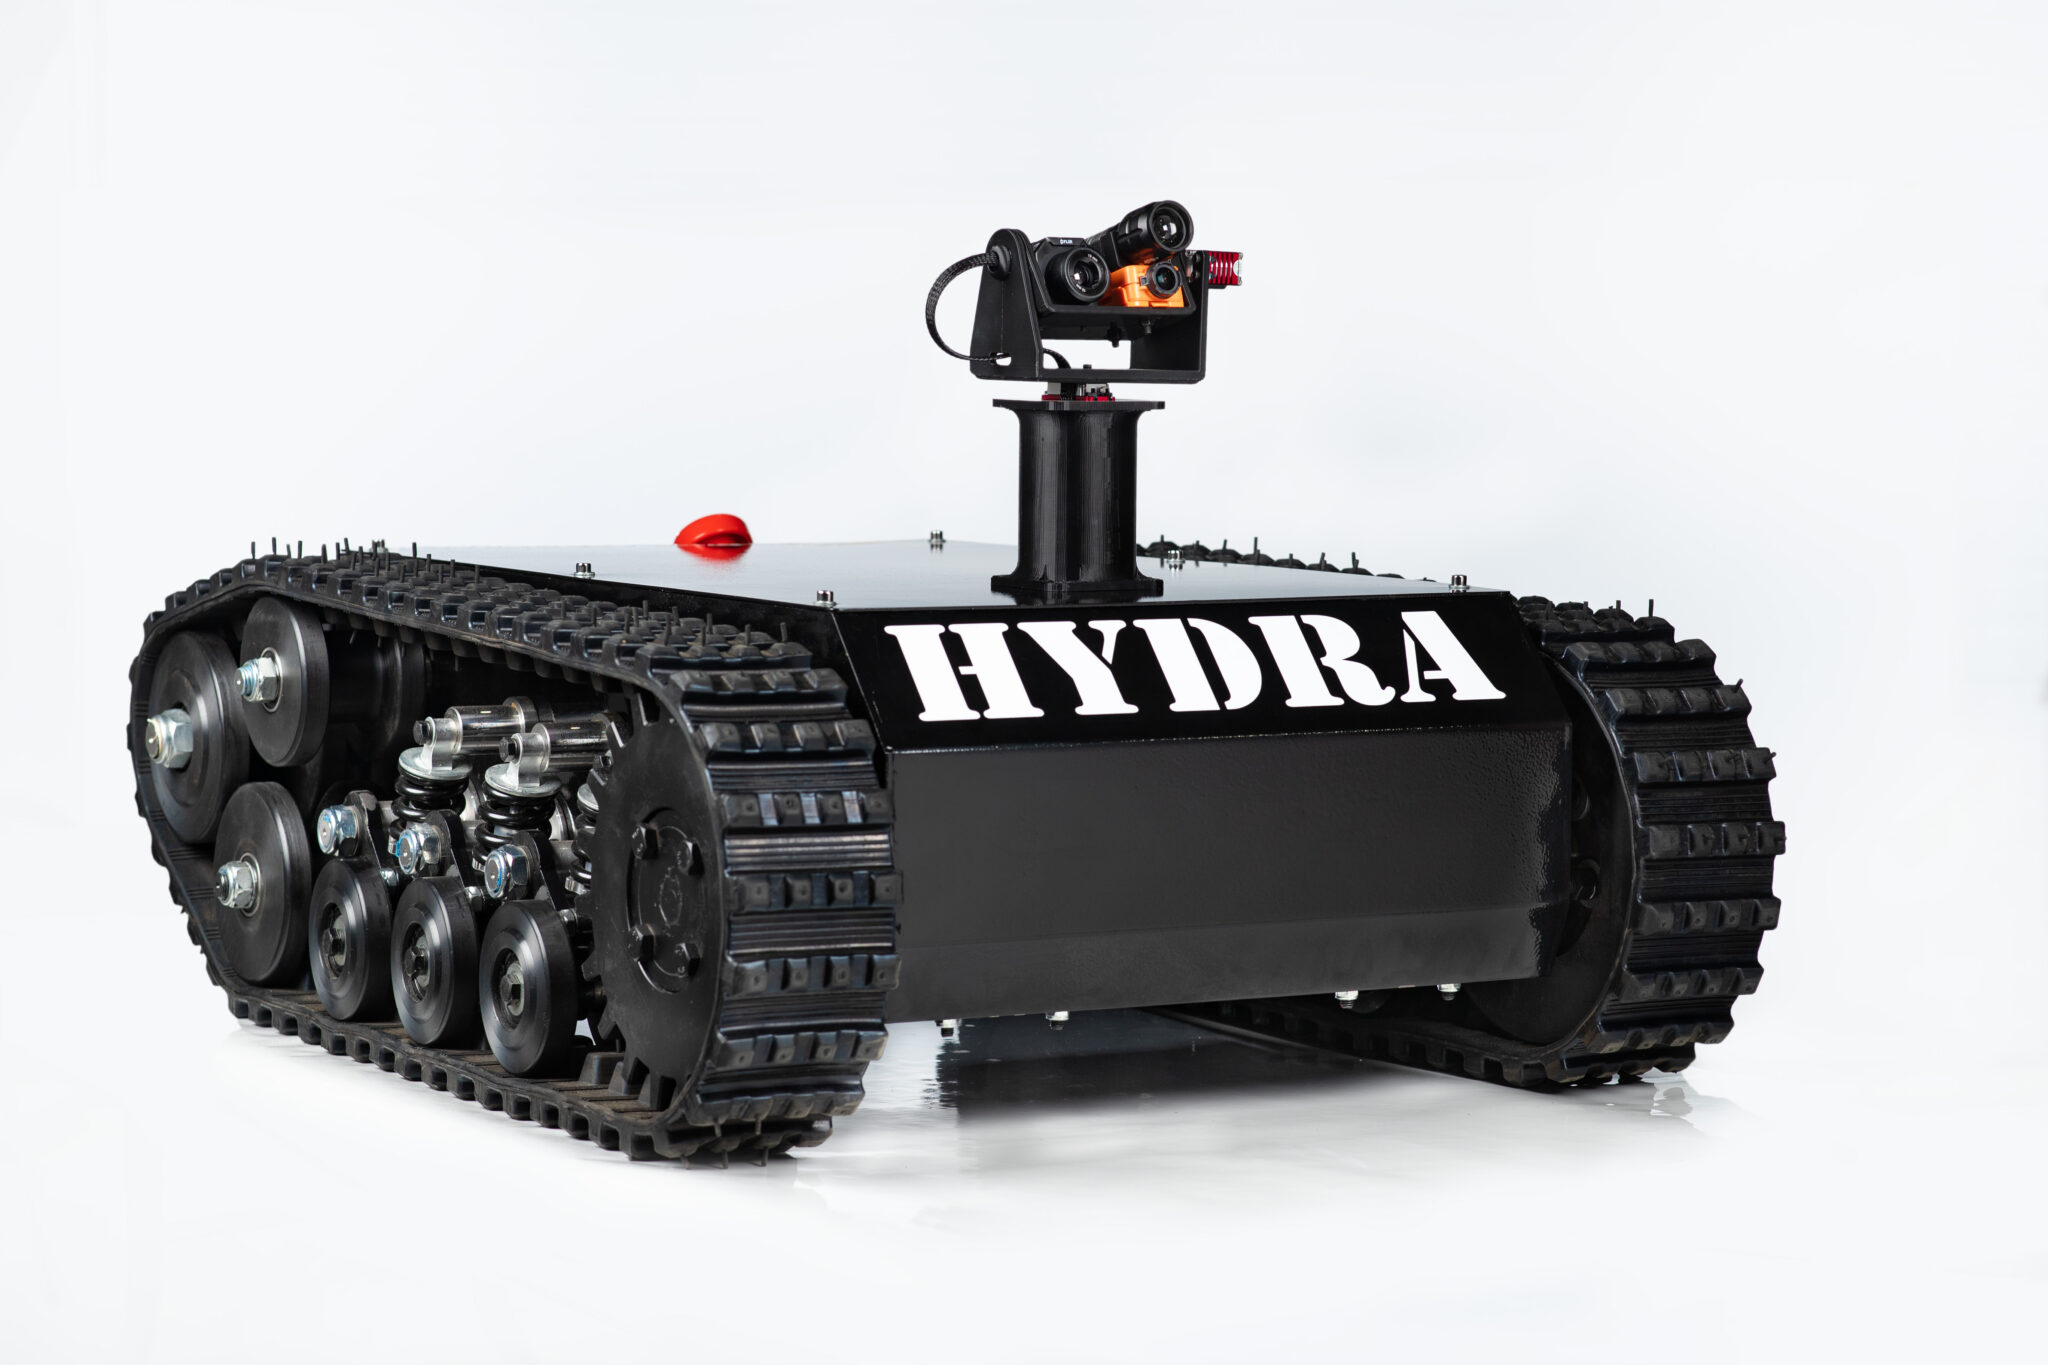 Volatus Aerospace Introduces All-Terrain Robotic Crawler, Hydra